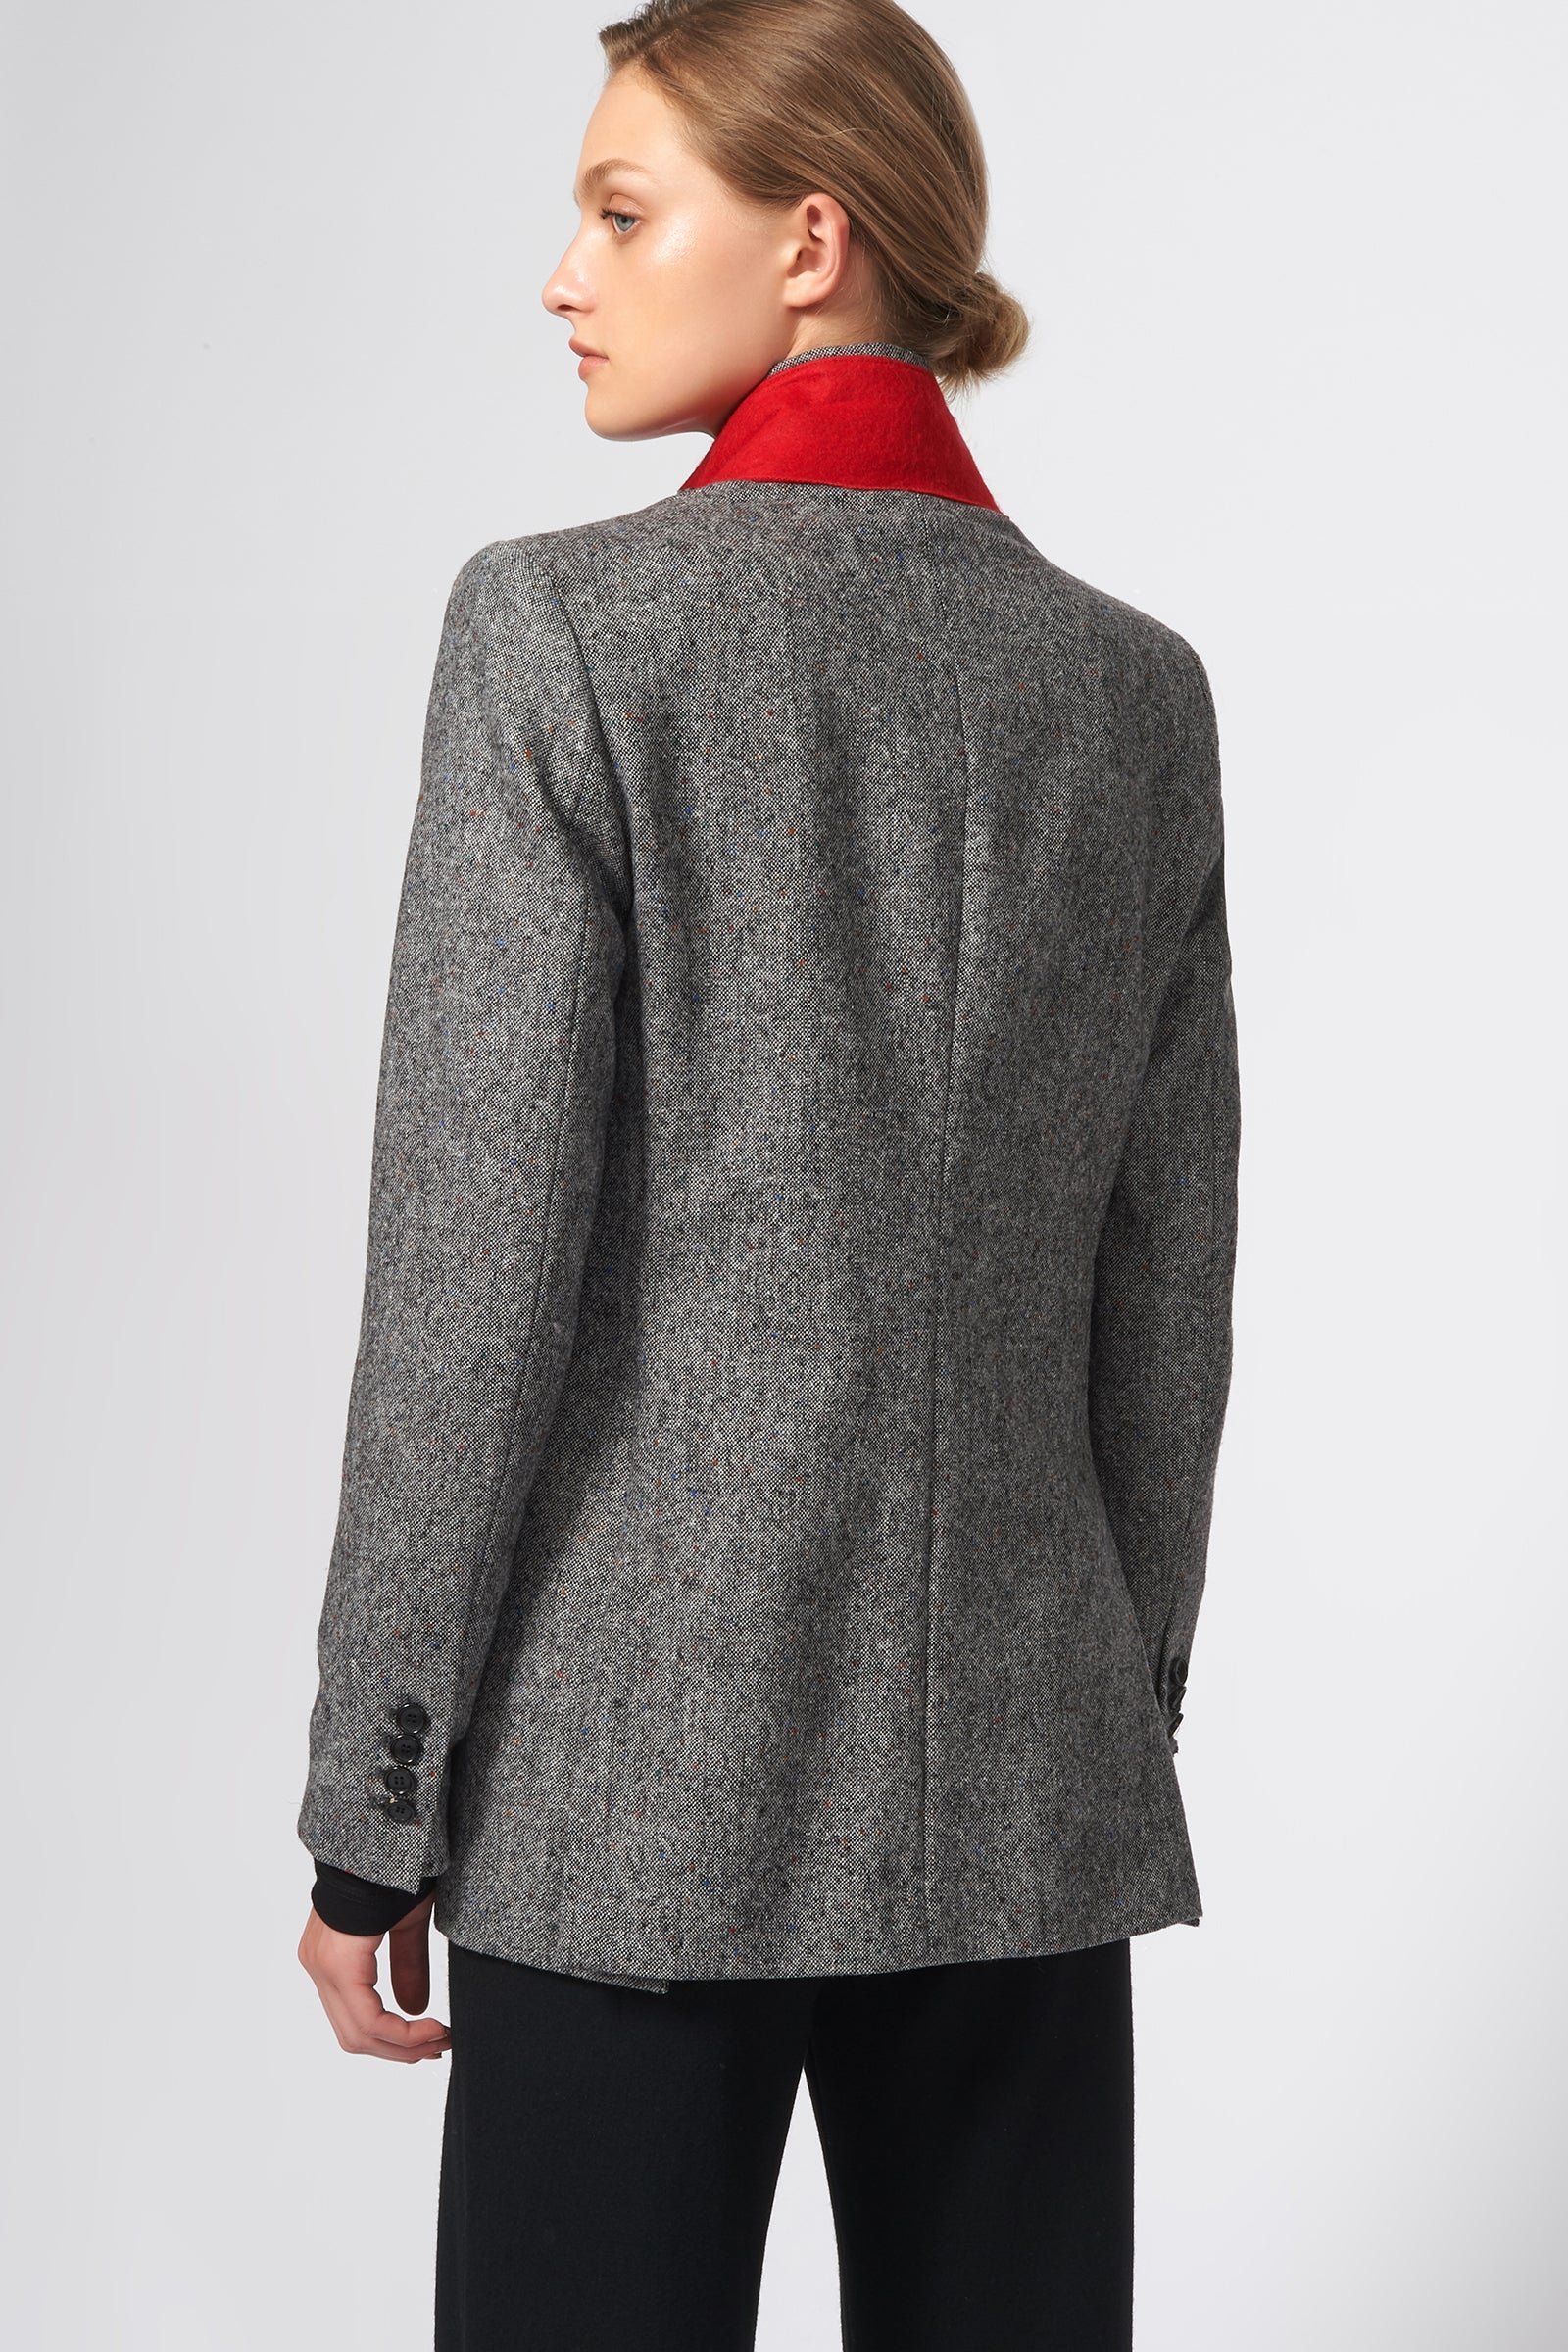 Classic Notch Blazer in Grey Tweed Woven in Italy – KAL RIEMAN